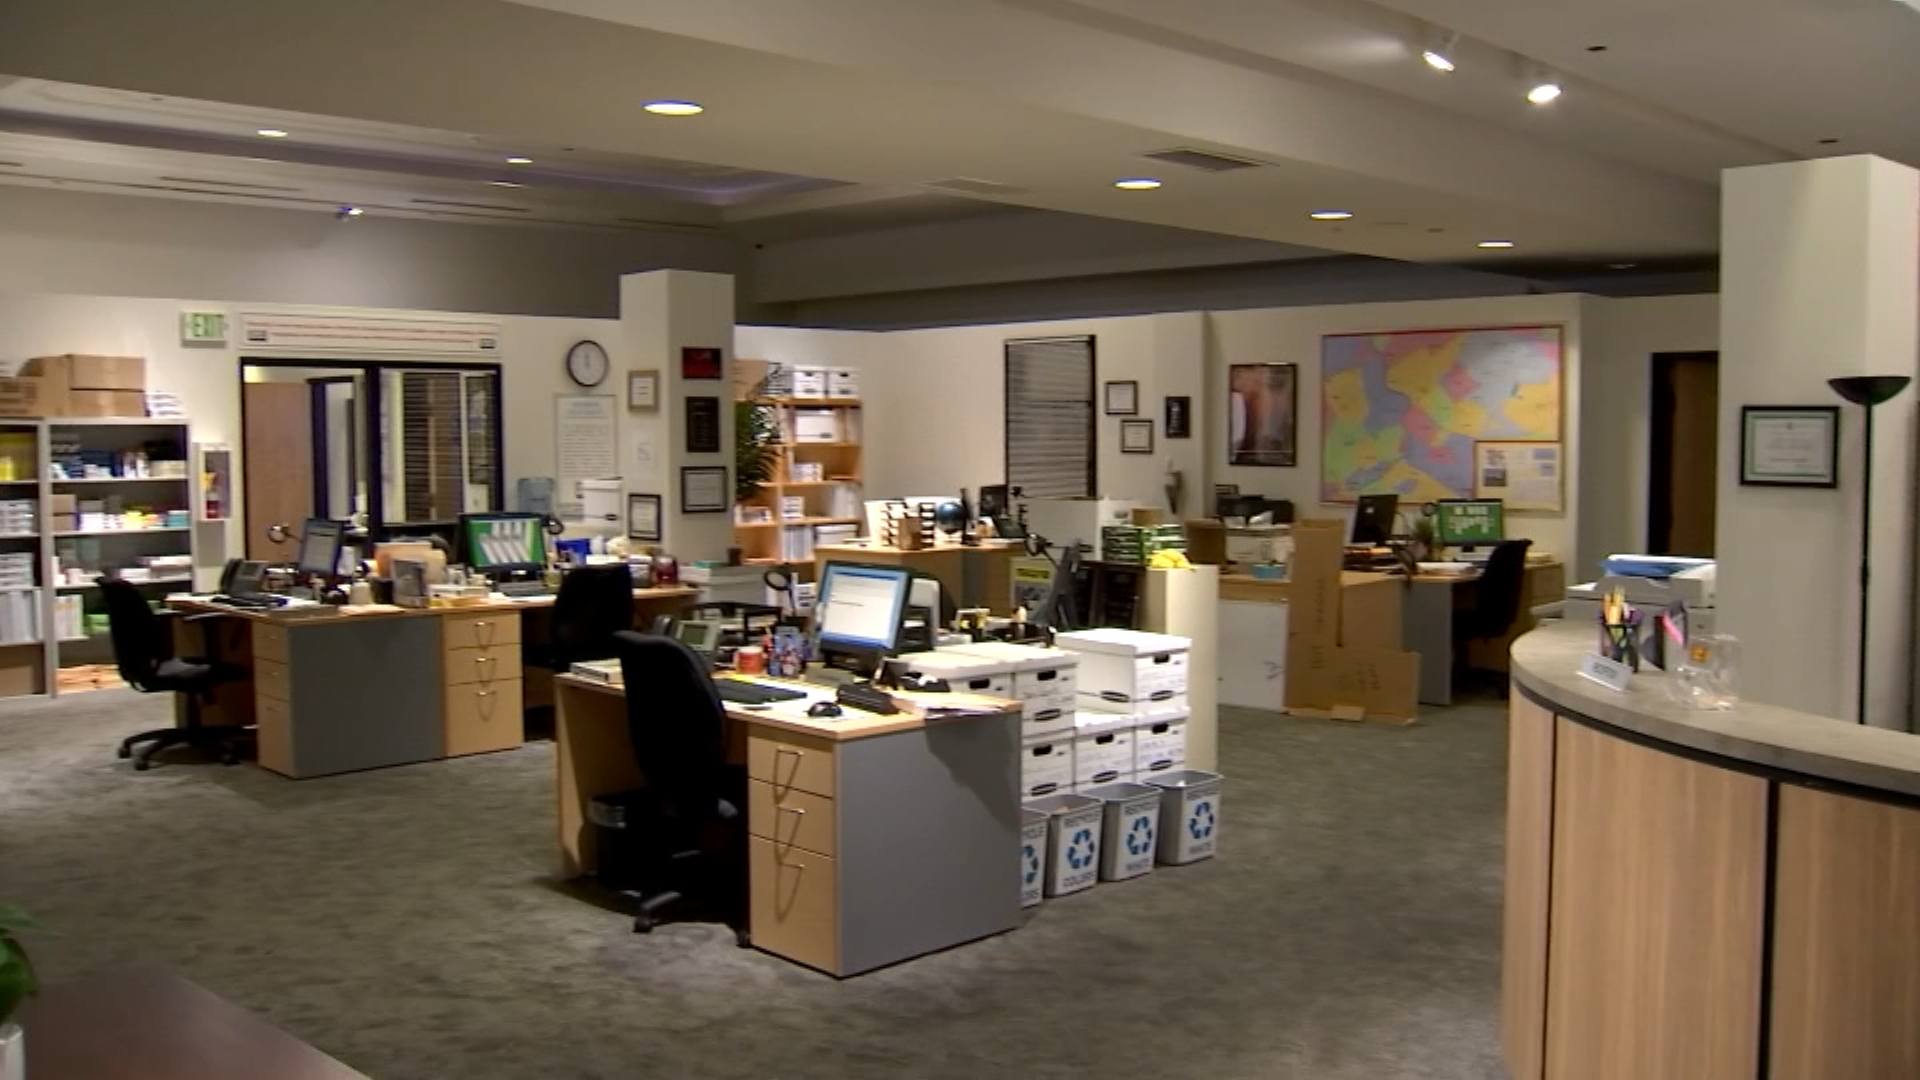 The Office's Dunder Mifflin At Center Of Trademark-Infringement